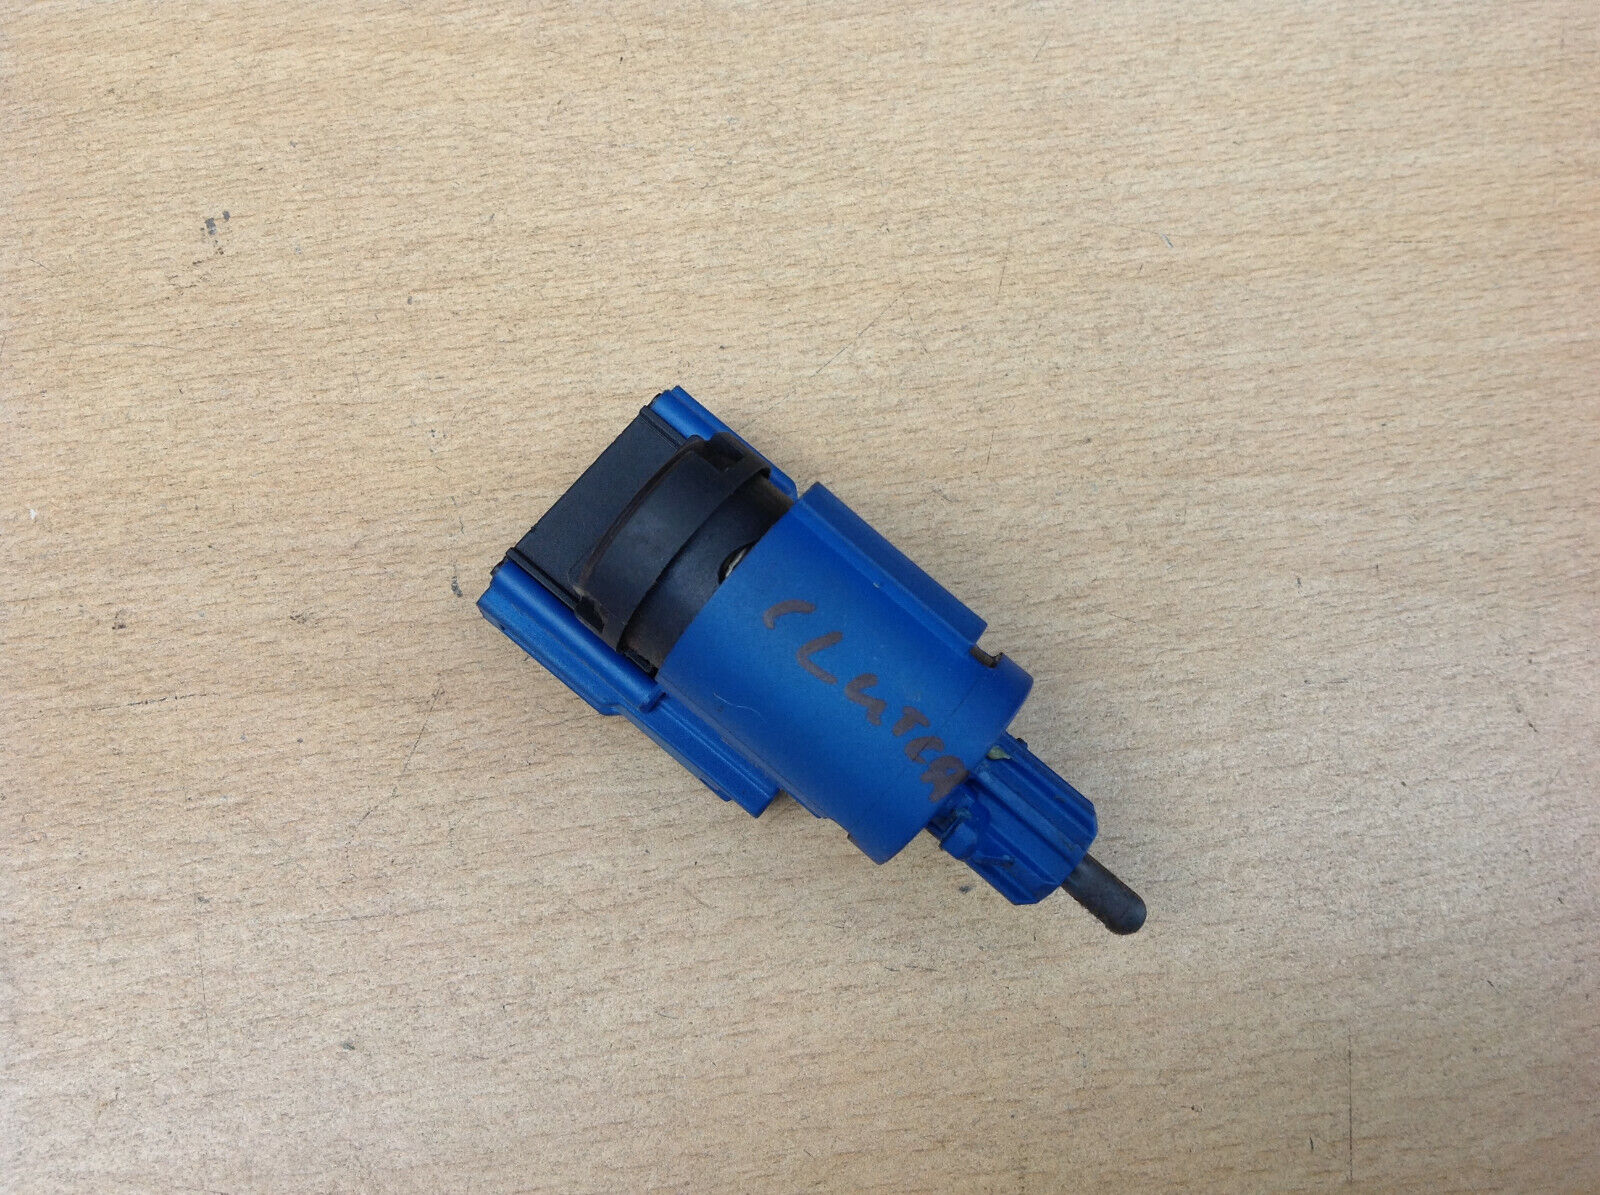 SKODA OCTAVIA Mk1 Clutch Pedal Switch Sensor 1J0927189E for sale online